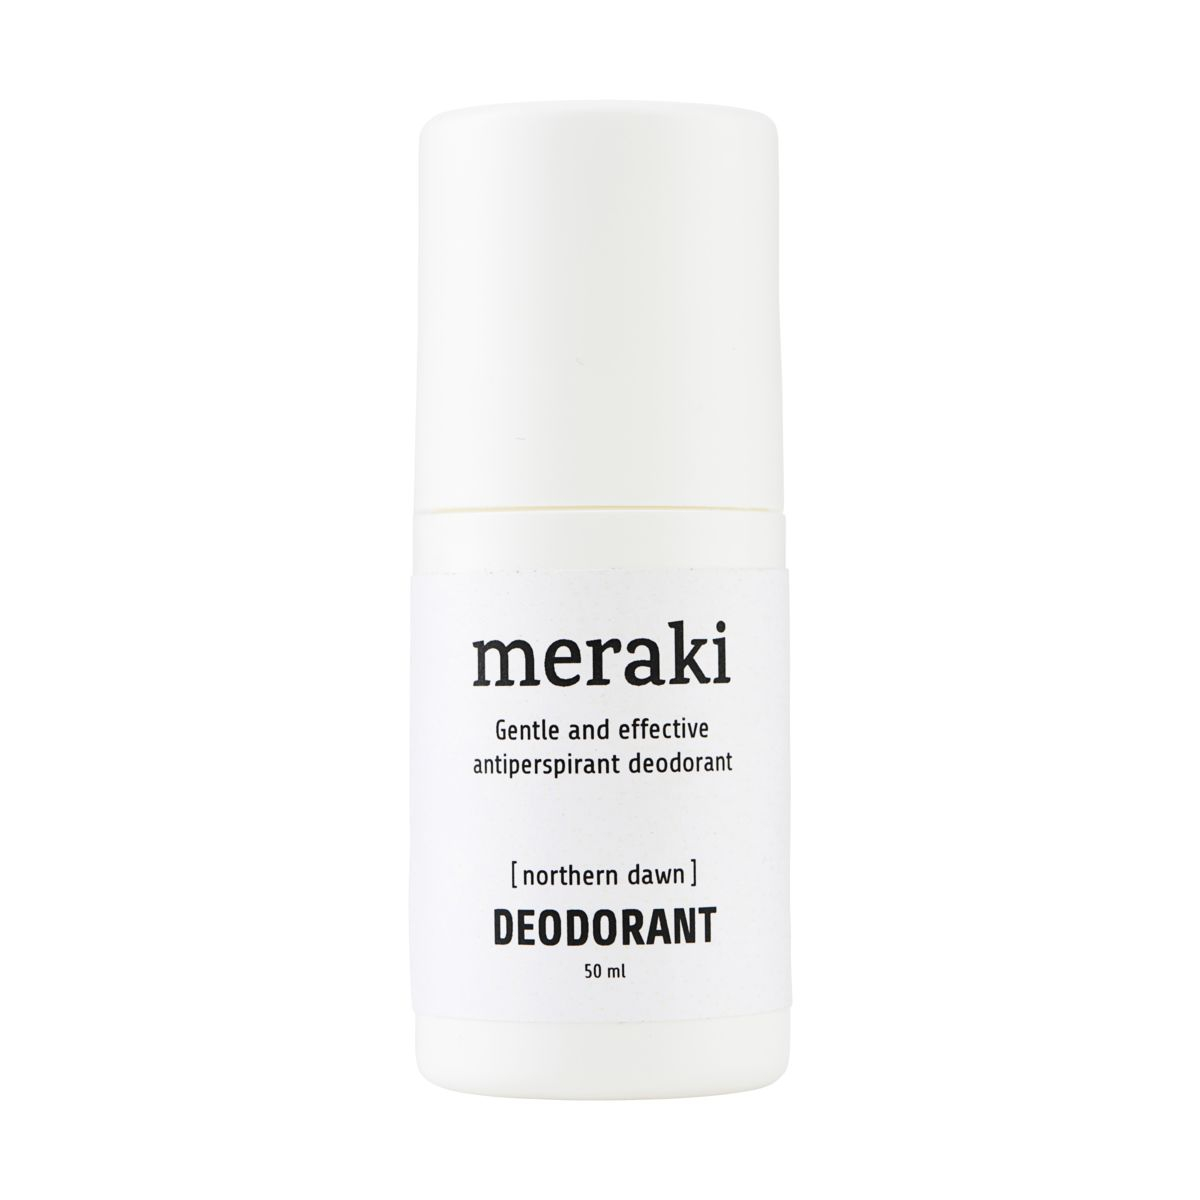 Billede af Meraki - Deodorant, northern dawn hos Rikki Tikki Shop